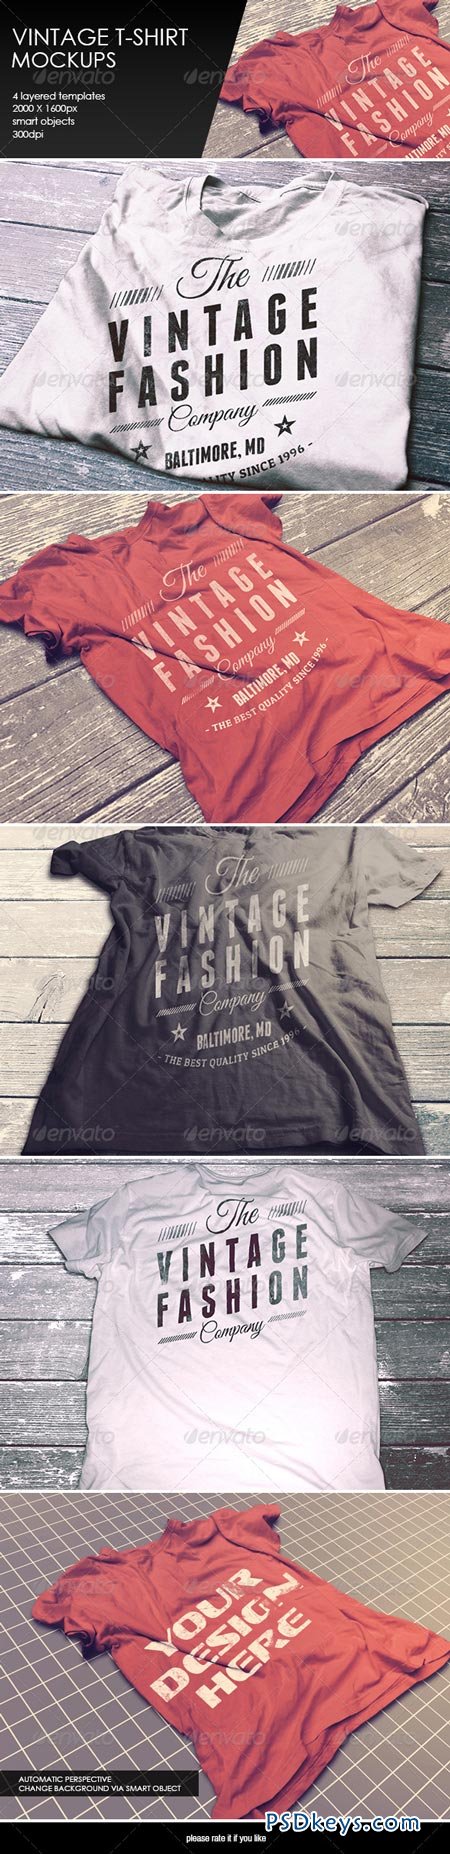 Vintage T-Shirt Mockup 8376796 » Free Download Photoshop ...